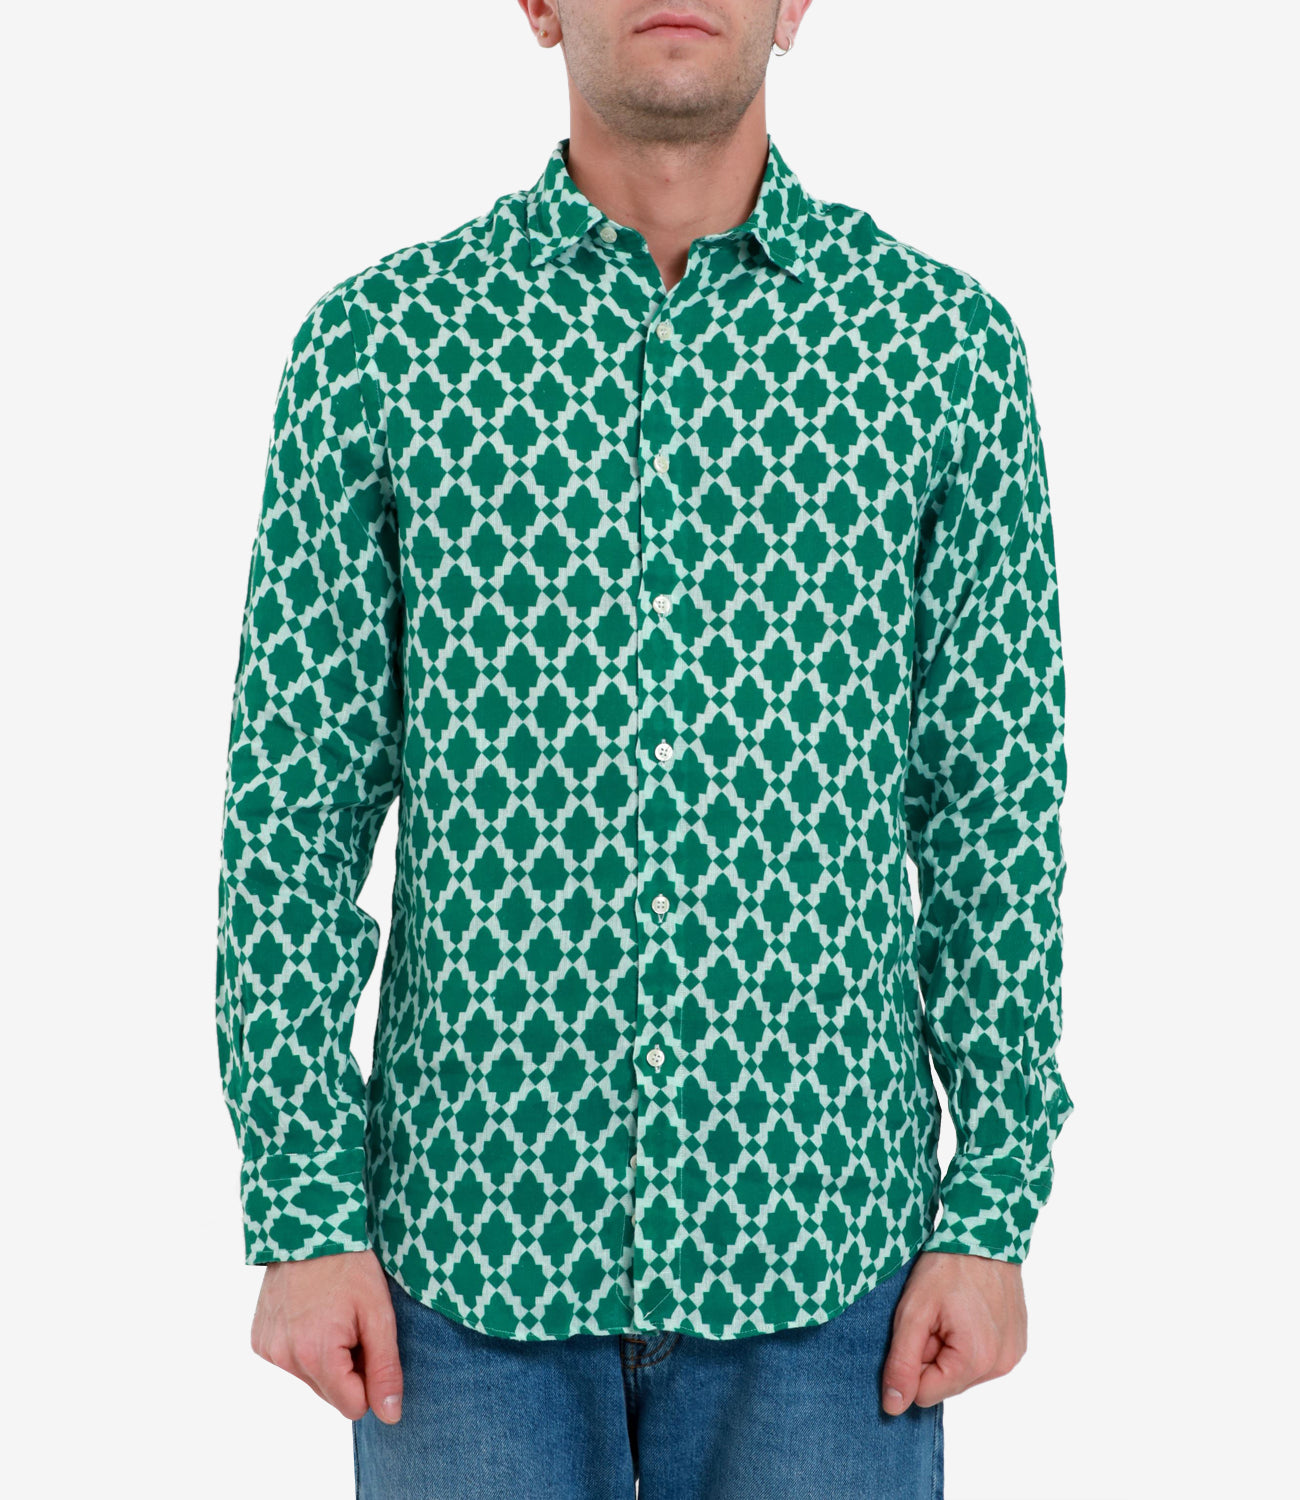 Peninsula Swim&Wear | Green and White Shirt